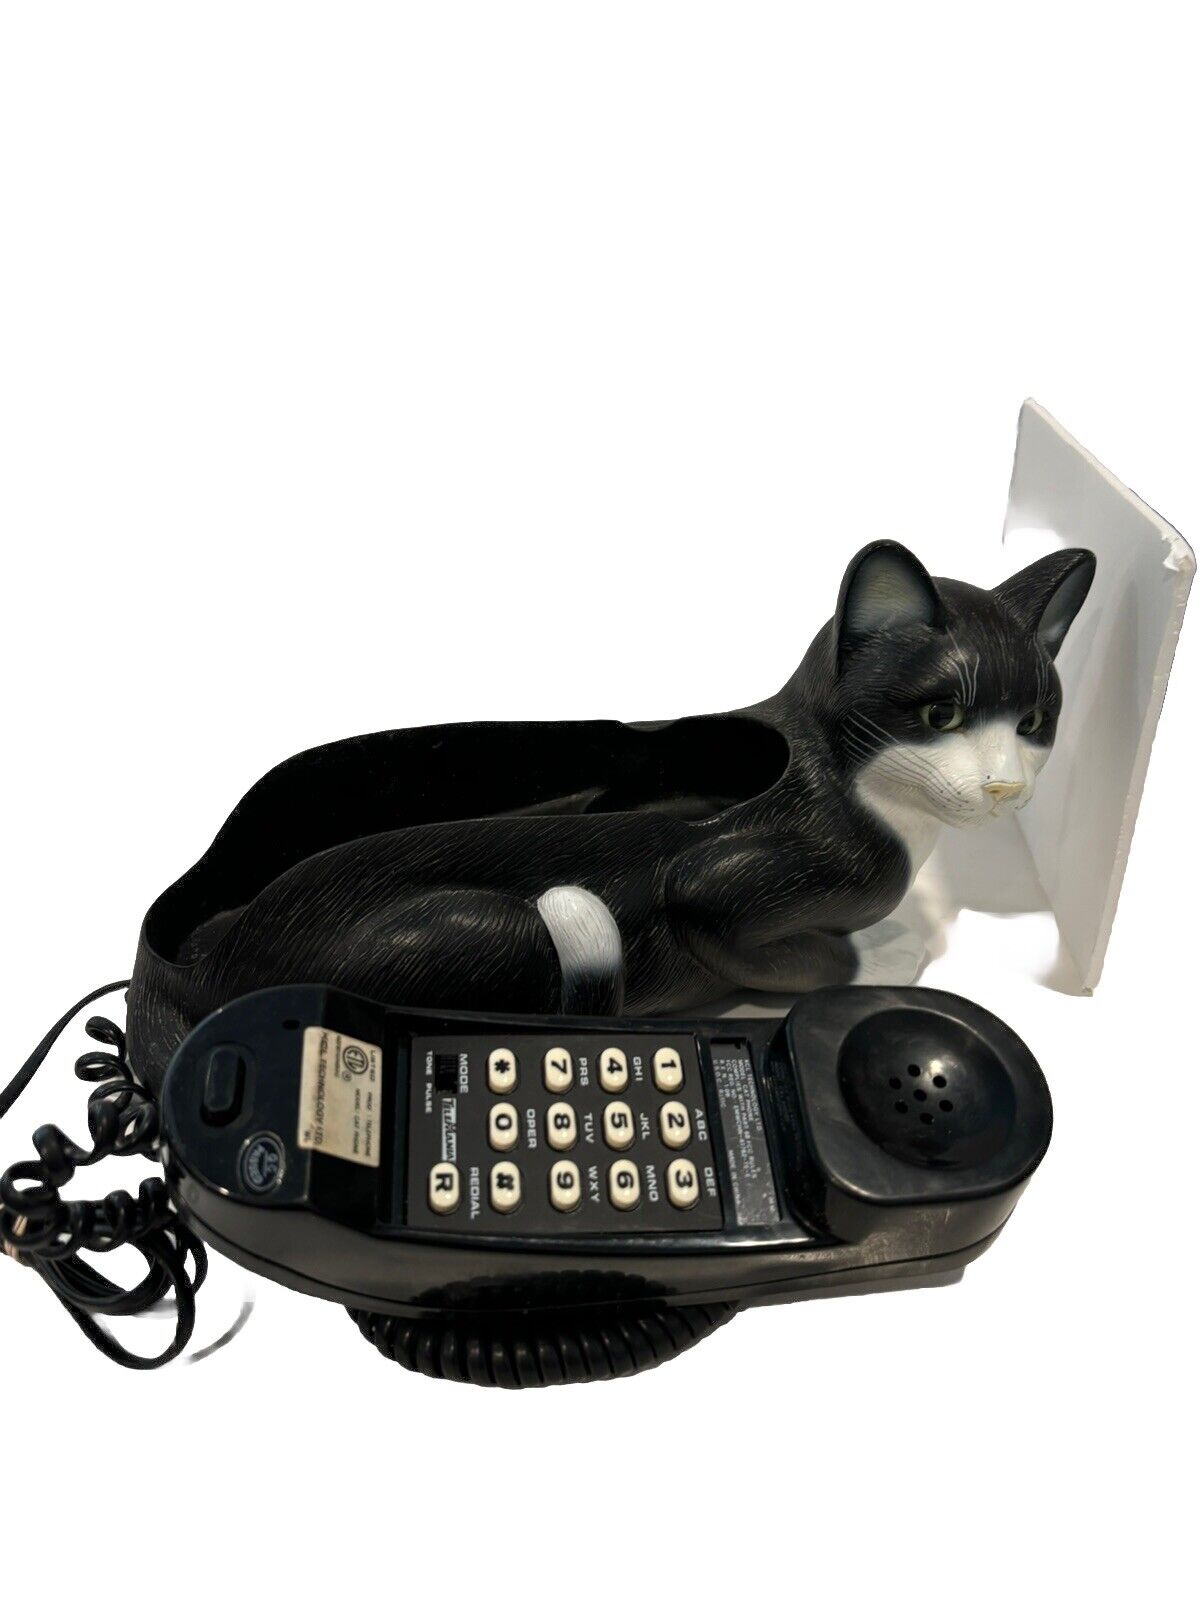 Vintage Tuxedo Cat Phone KCL Technology LTD 0992 Corded Telemania No RJ45